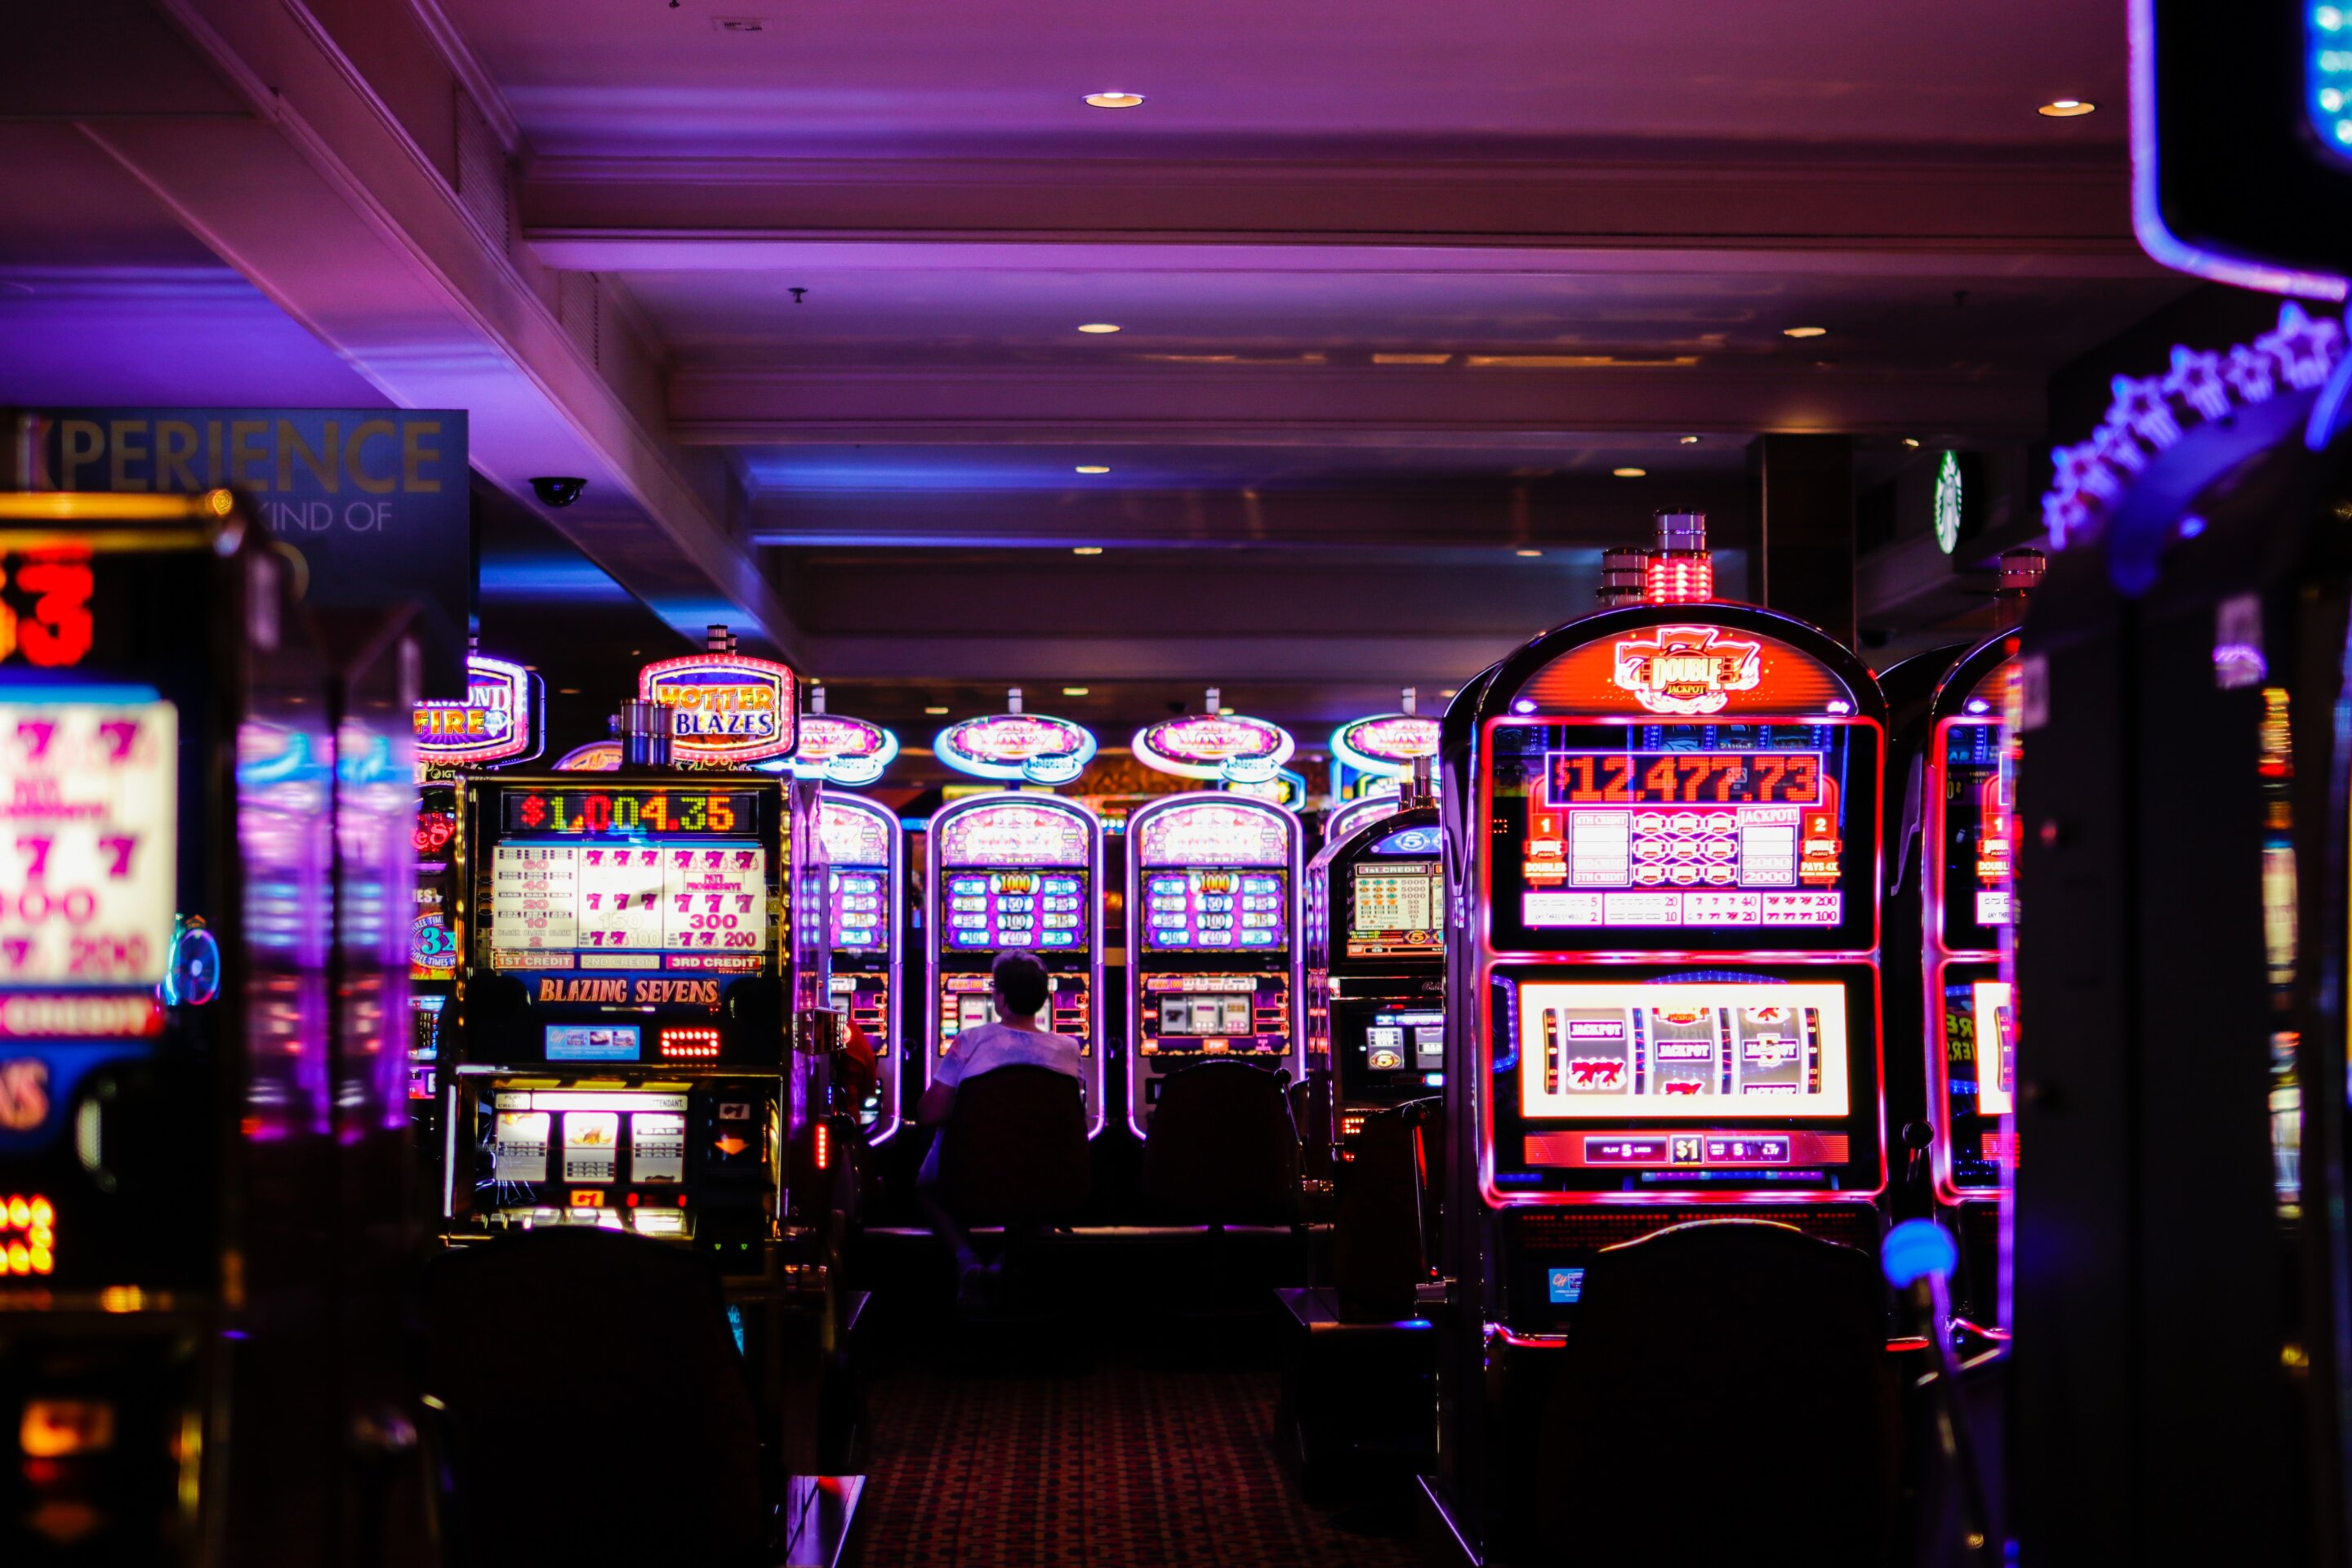 #’Take Time to Think’ gambling warning found to have no impact on betting behavior